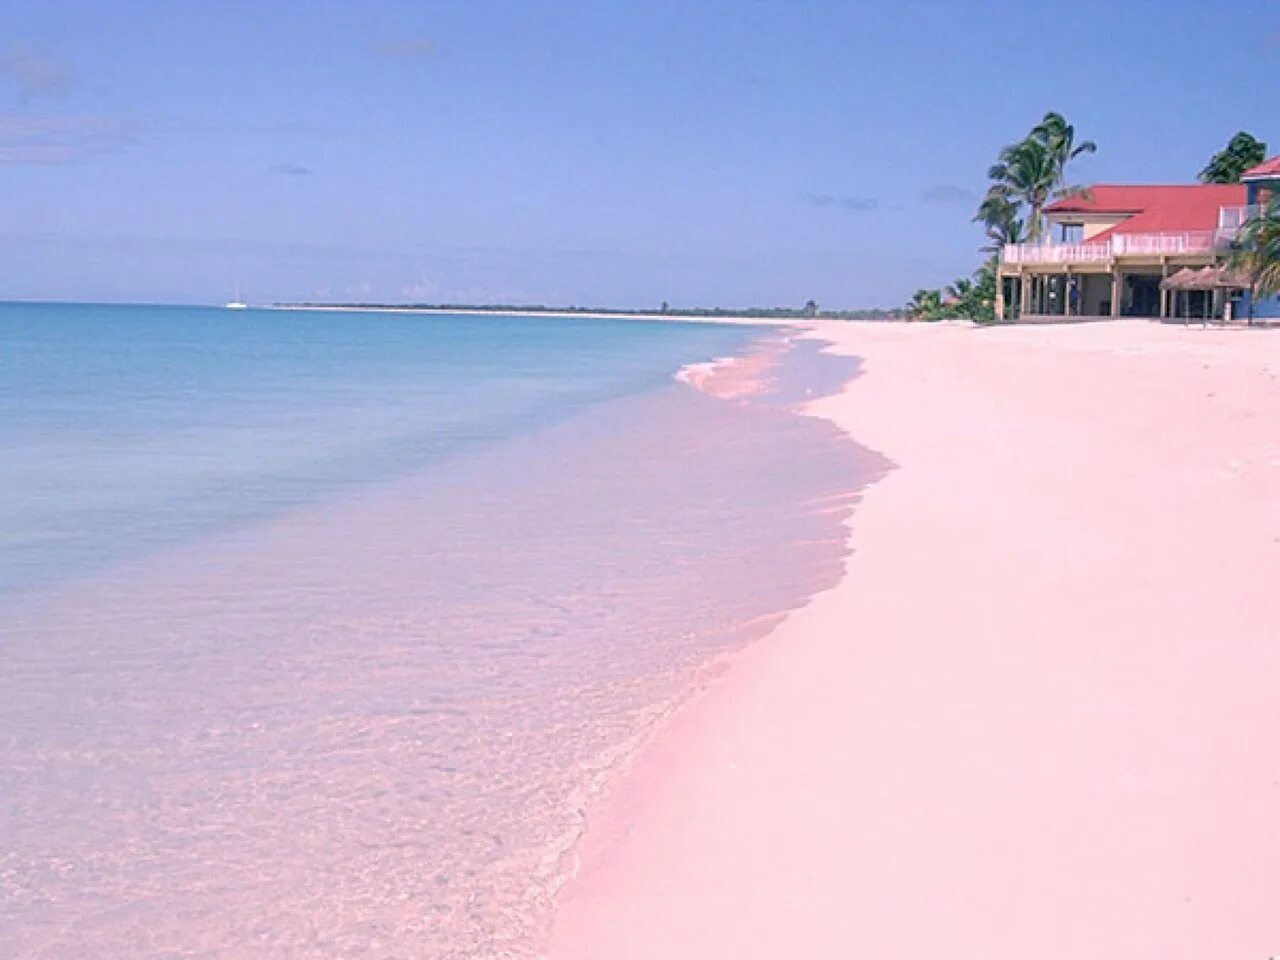 Harbor island. Pink Sands Beach Багамские острова. Пляж Пинк Сэндс Бич Багамские острова. Розовый пляж Пинк Сэндс Бич, Багамские острова. Розовый пляж. Остров Харбор, Багамы.